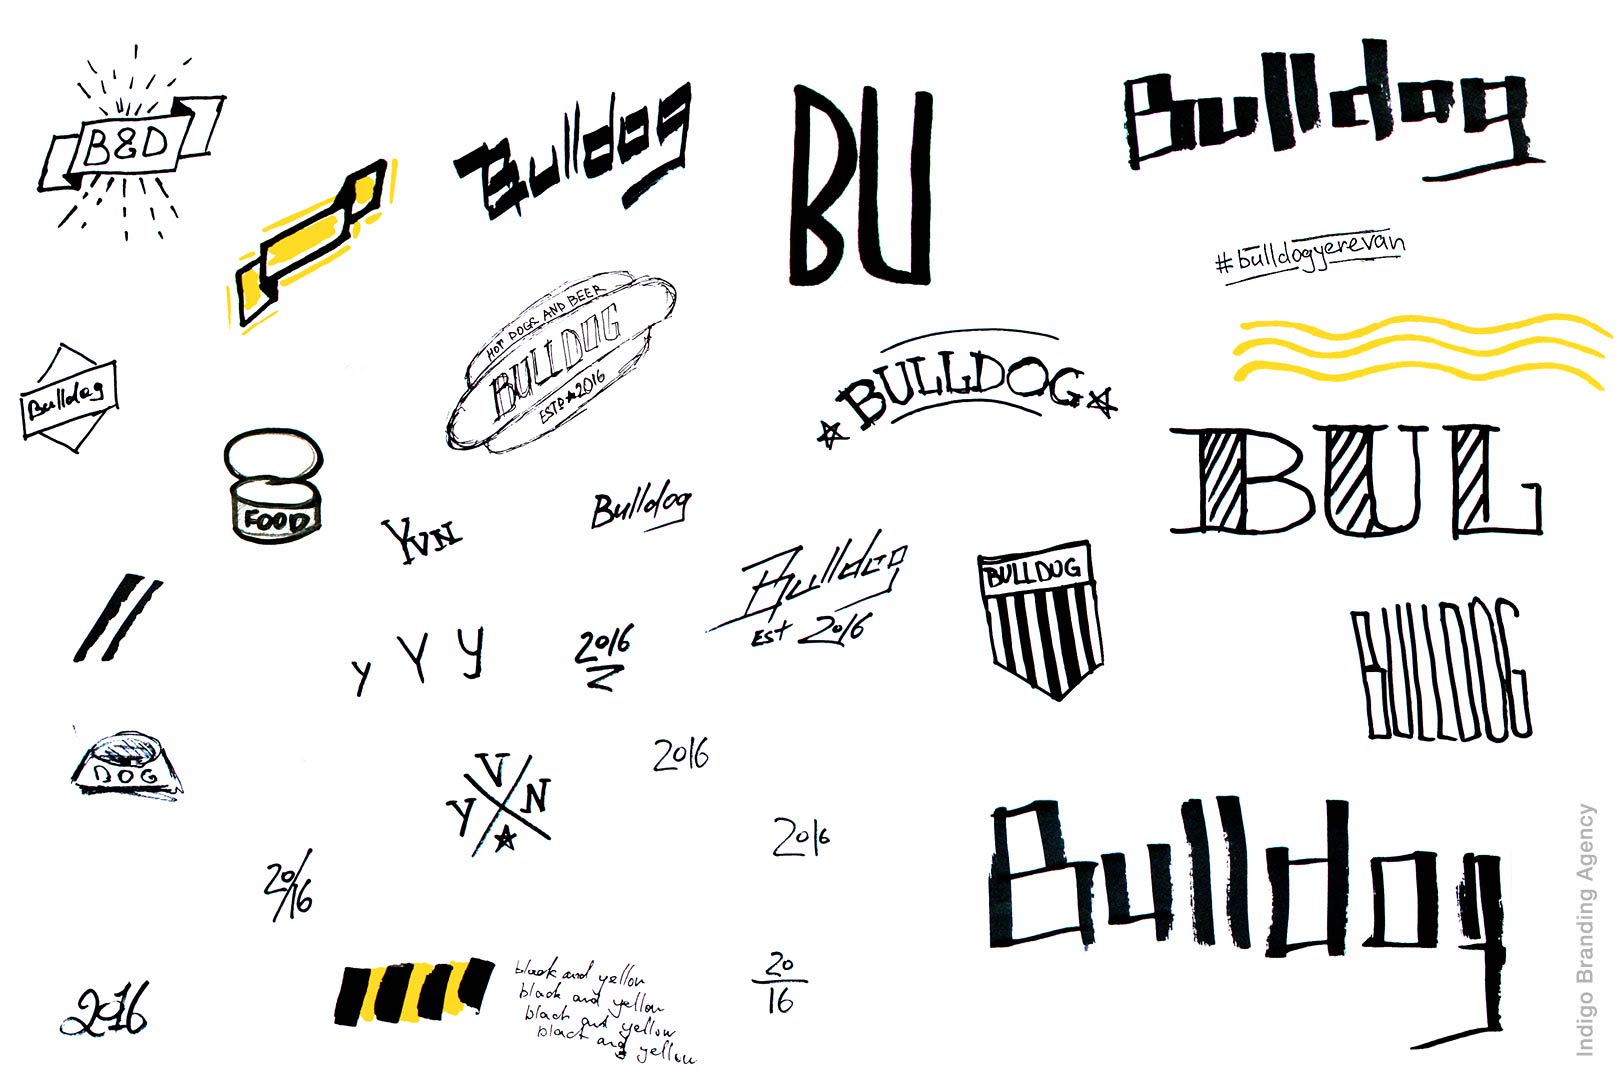 Buldog branding and logo design by Indigo branding